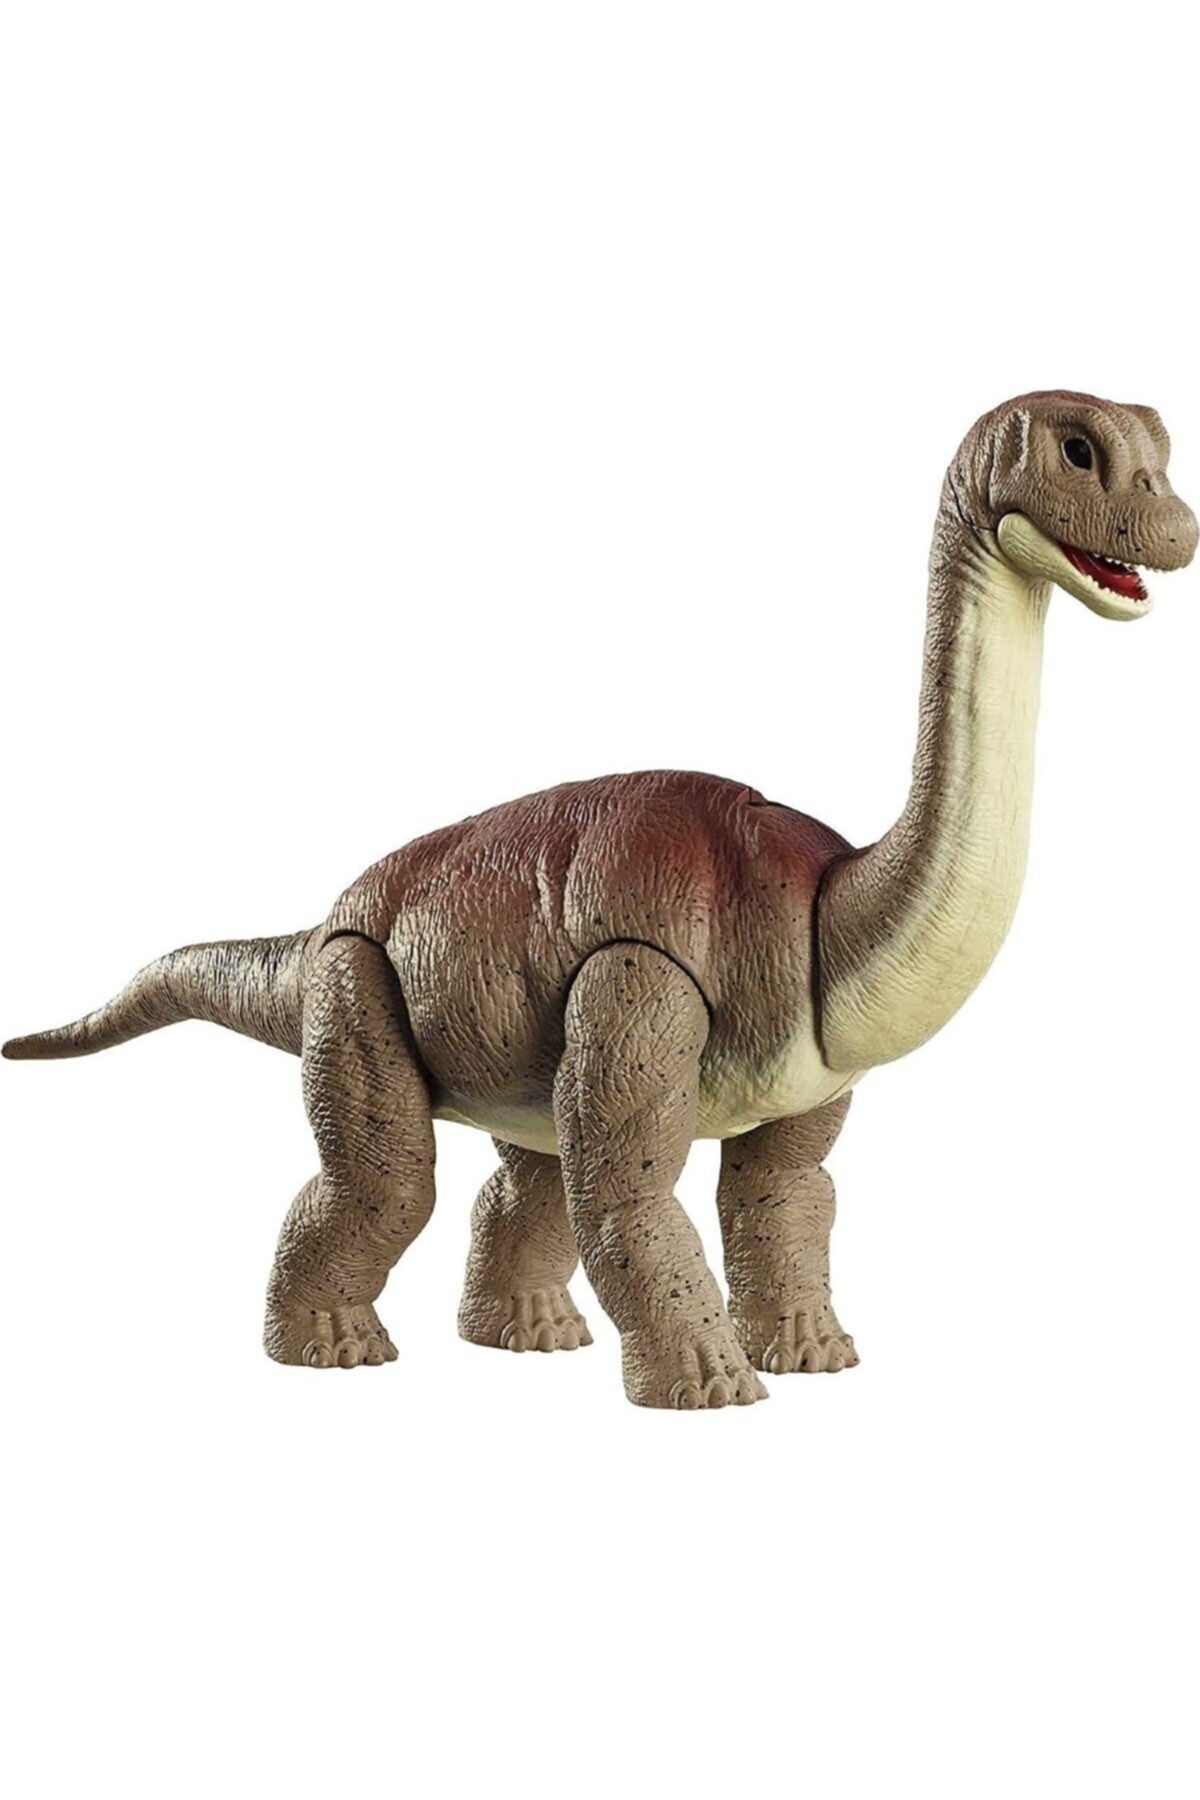 Jurassic World Dinozor Figürleri - Brachiosaurus